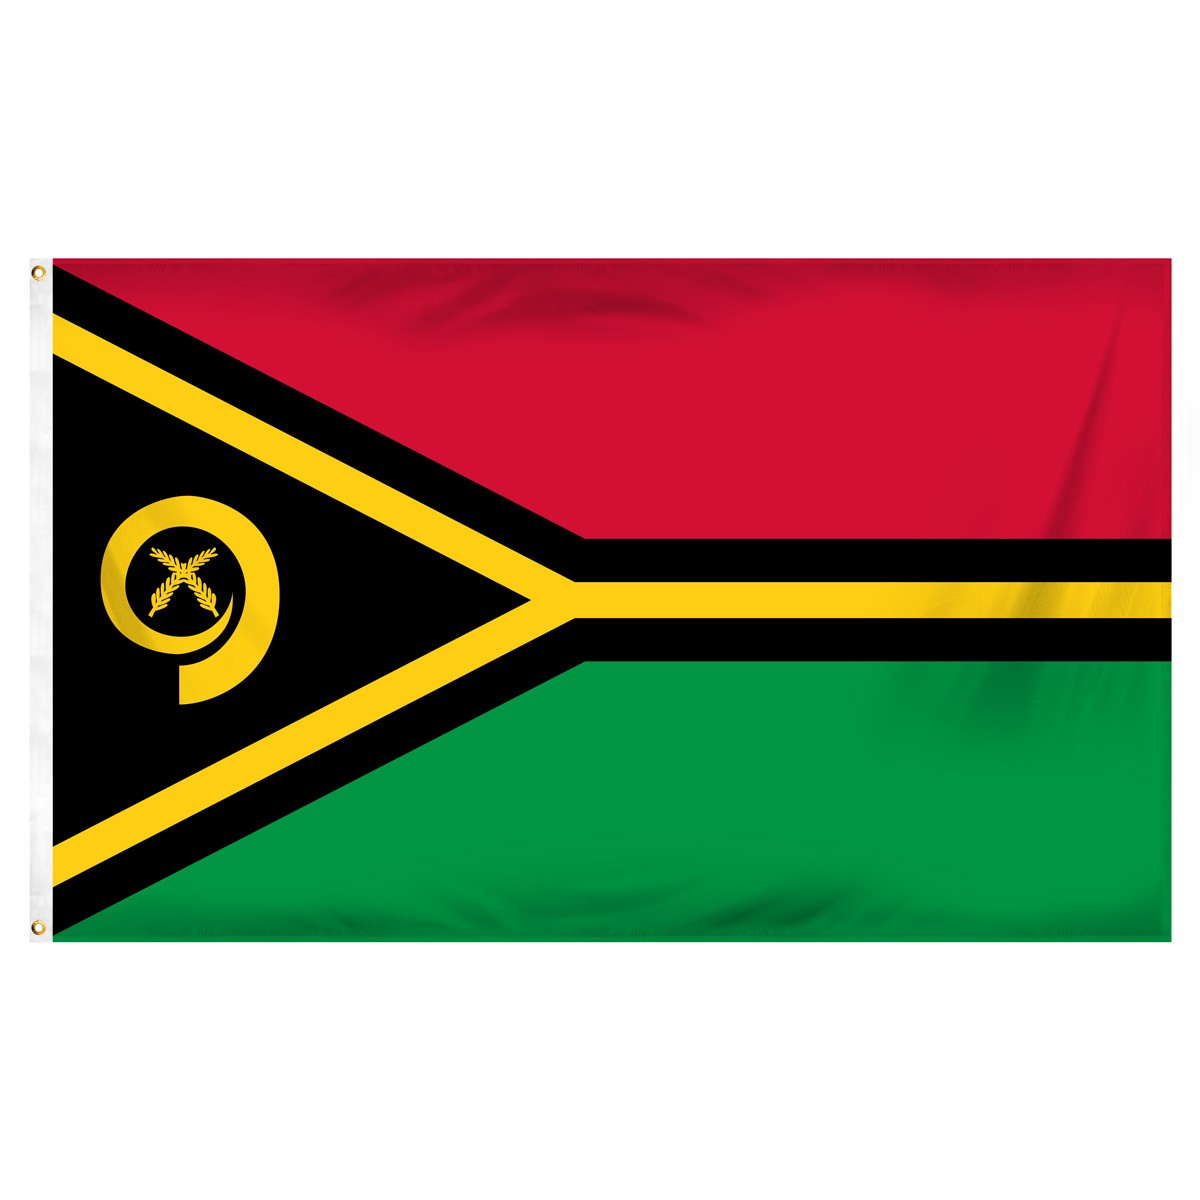 Vanuatu Building Pennants and Flags